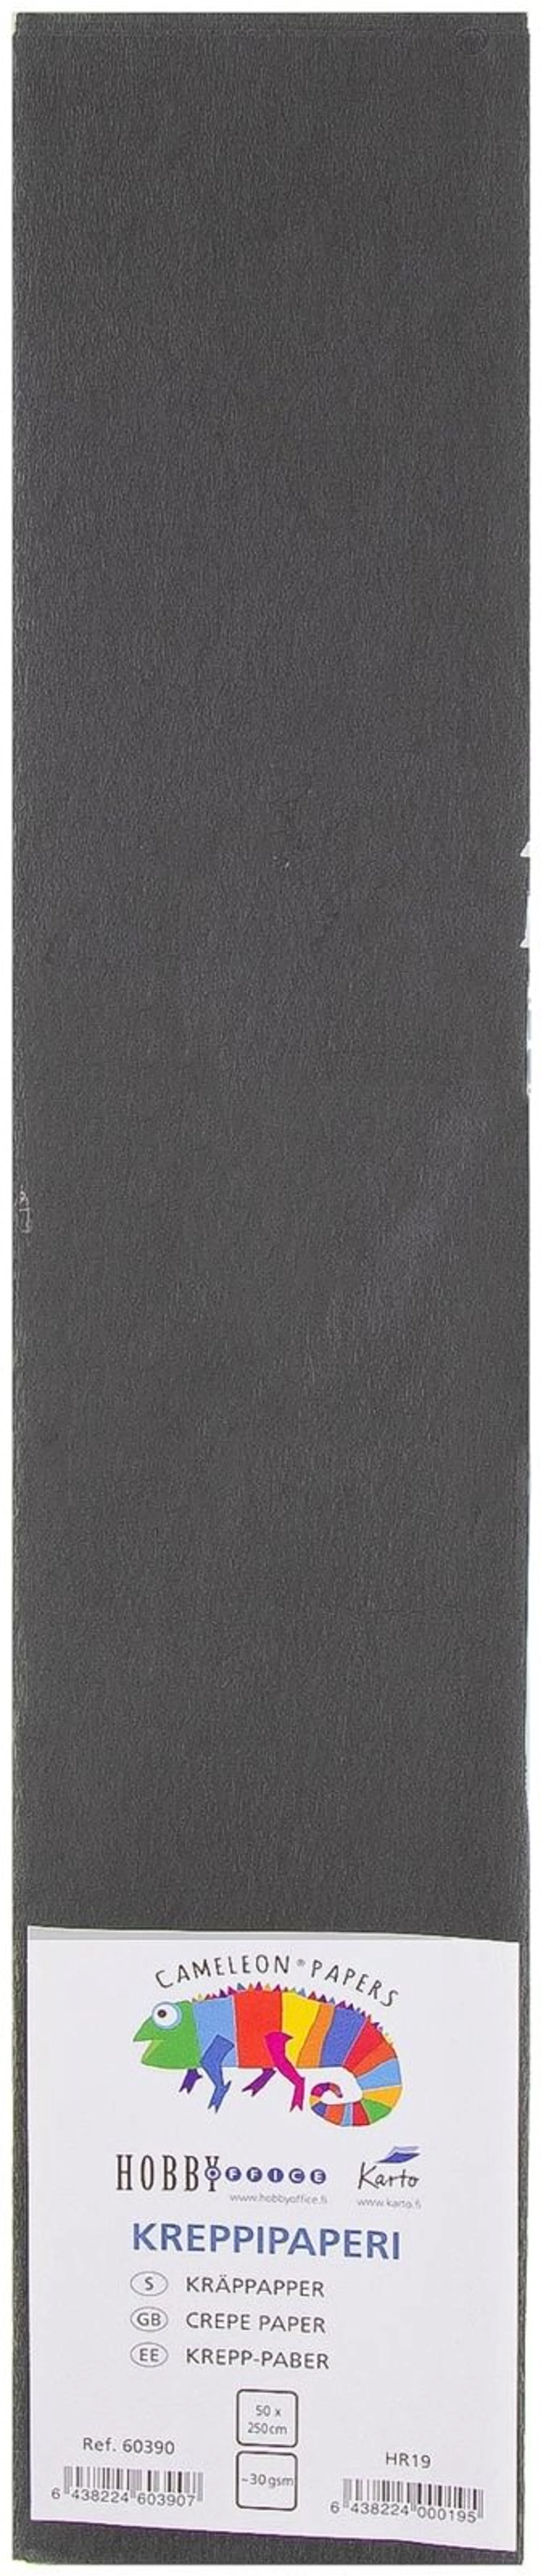 Karto kreppipaperi musta 50cmx2,5m 30gsm